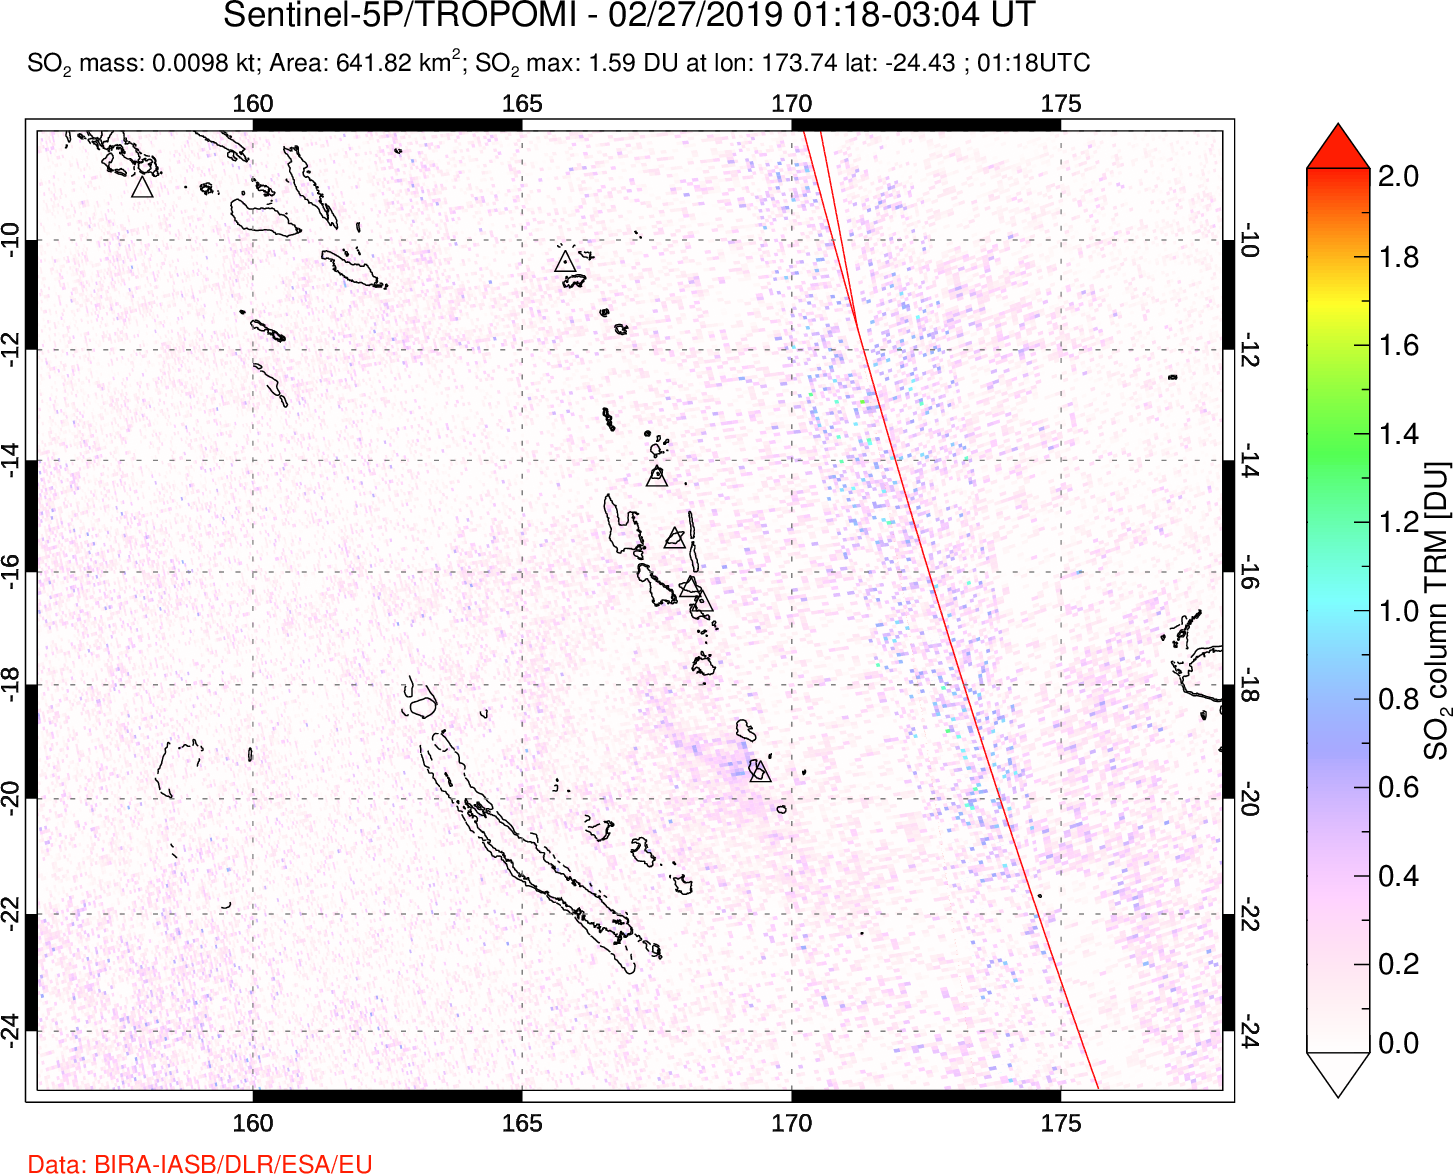 A sulfur dioxide image over Vanuatu, South Pacific on Feb 27, 2019.